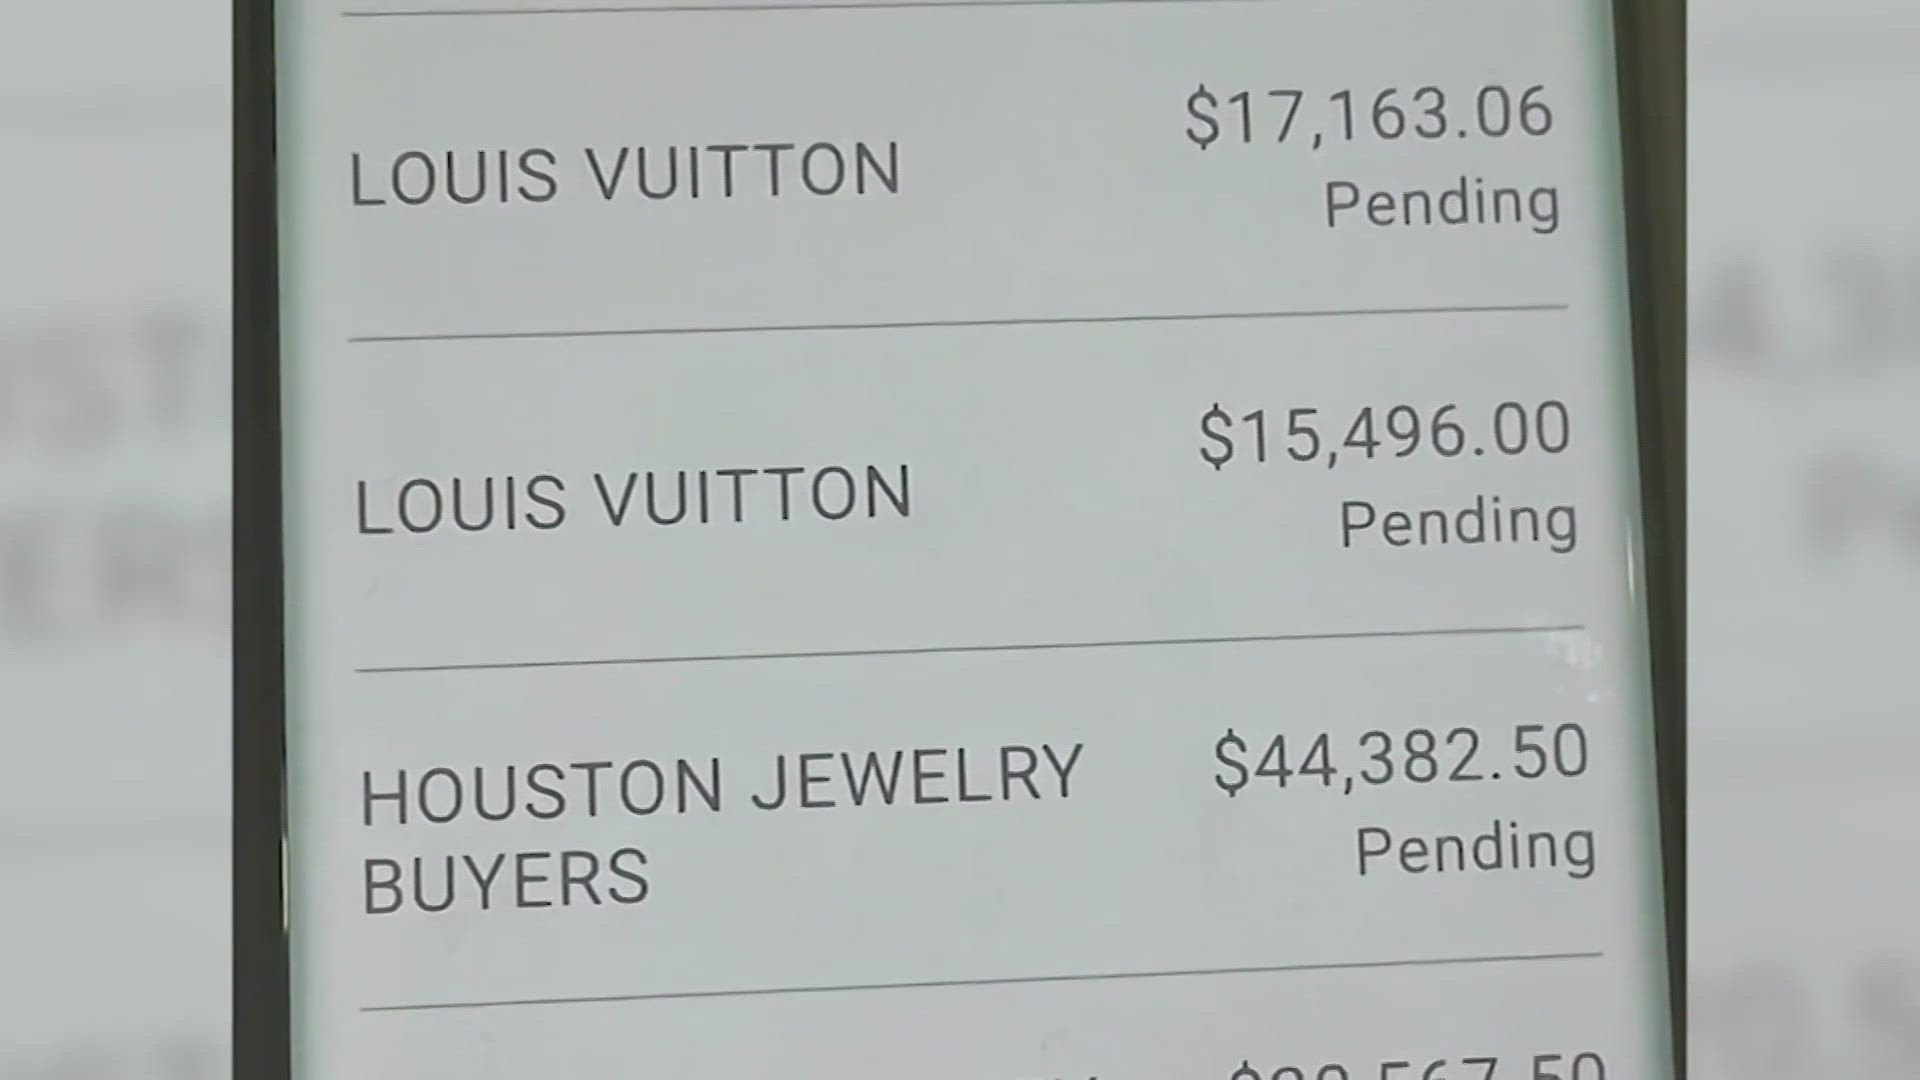 Louis Vuitton - Luxury Cards Co